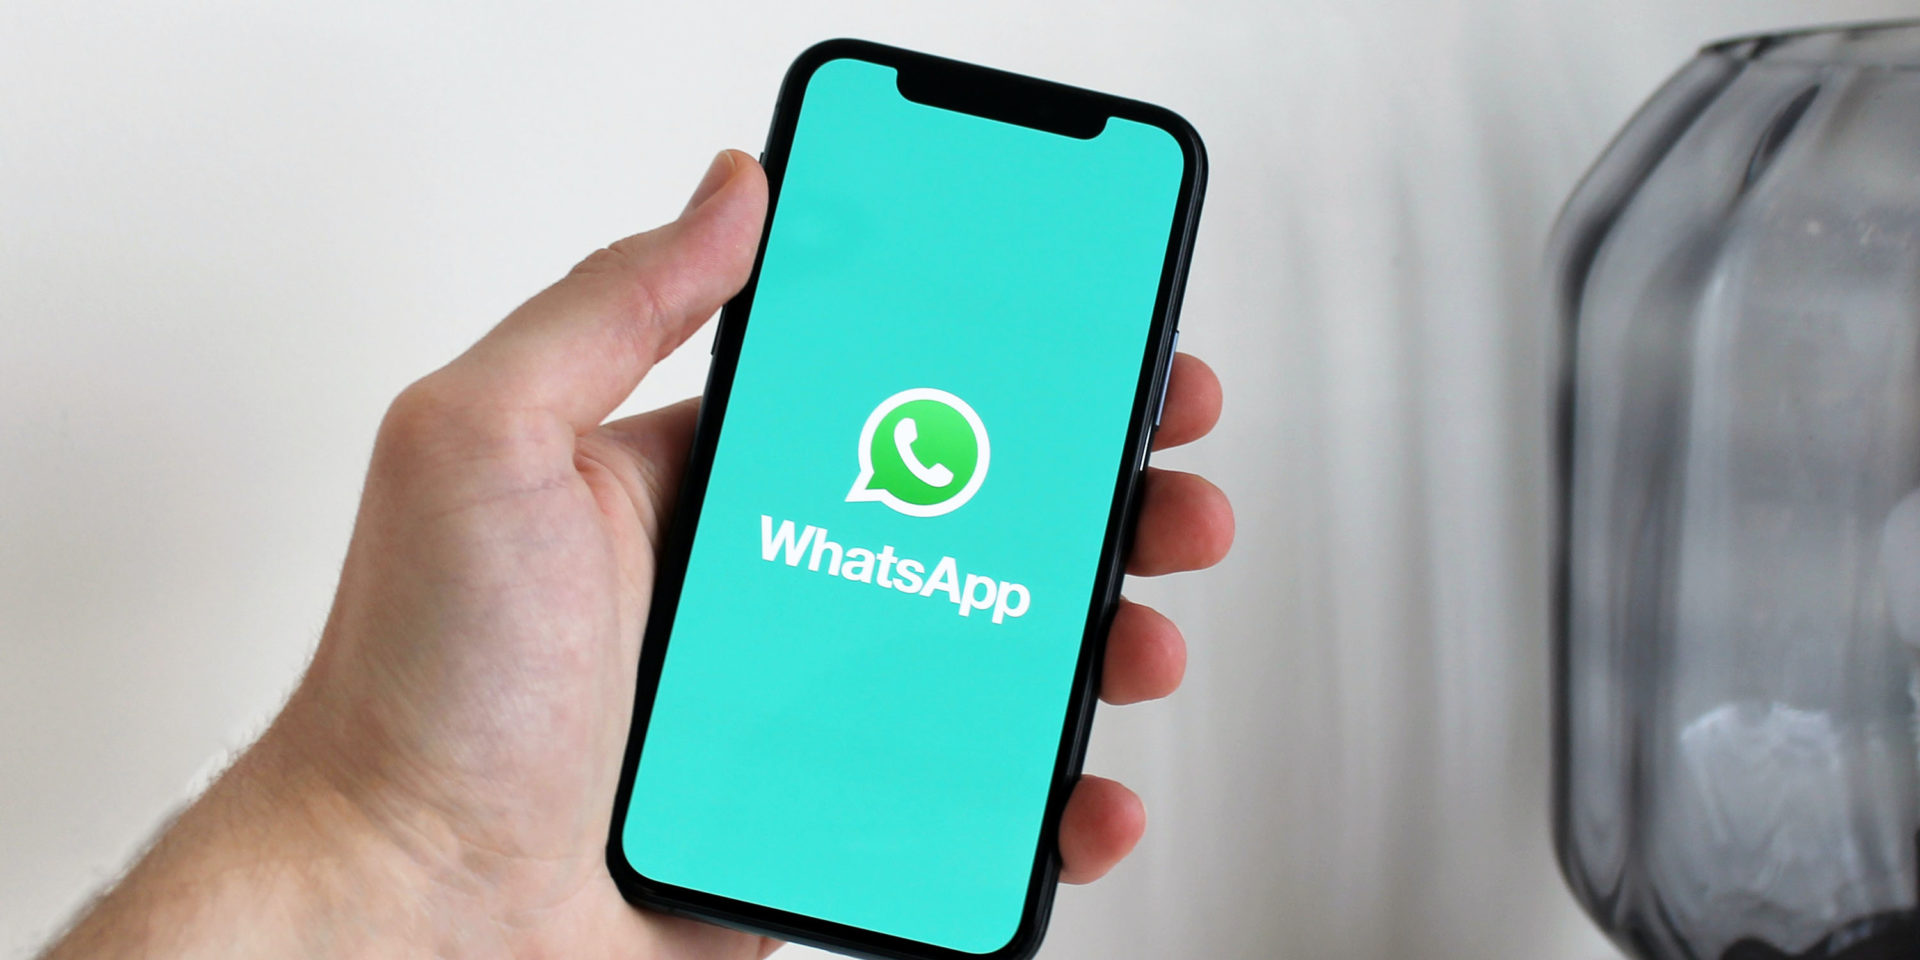 WhatsApp ย้ายแชตจาก iPhone สู่ Android ได้แล้วนะ แต่ยังต้องใช้สาย